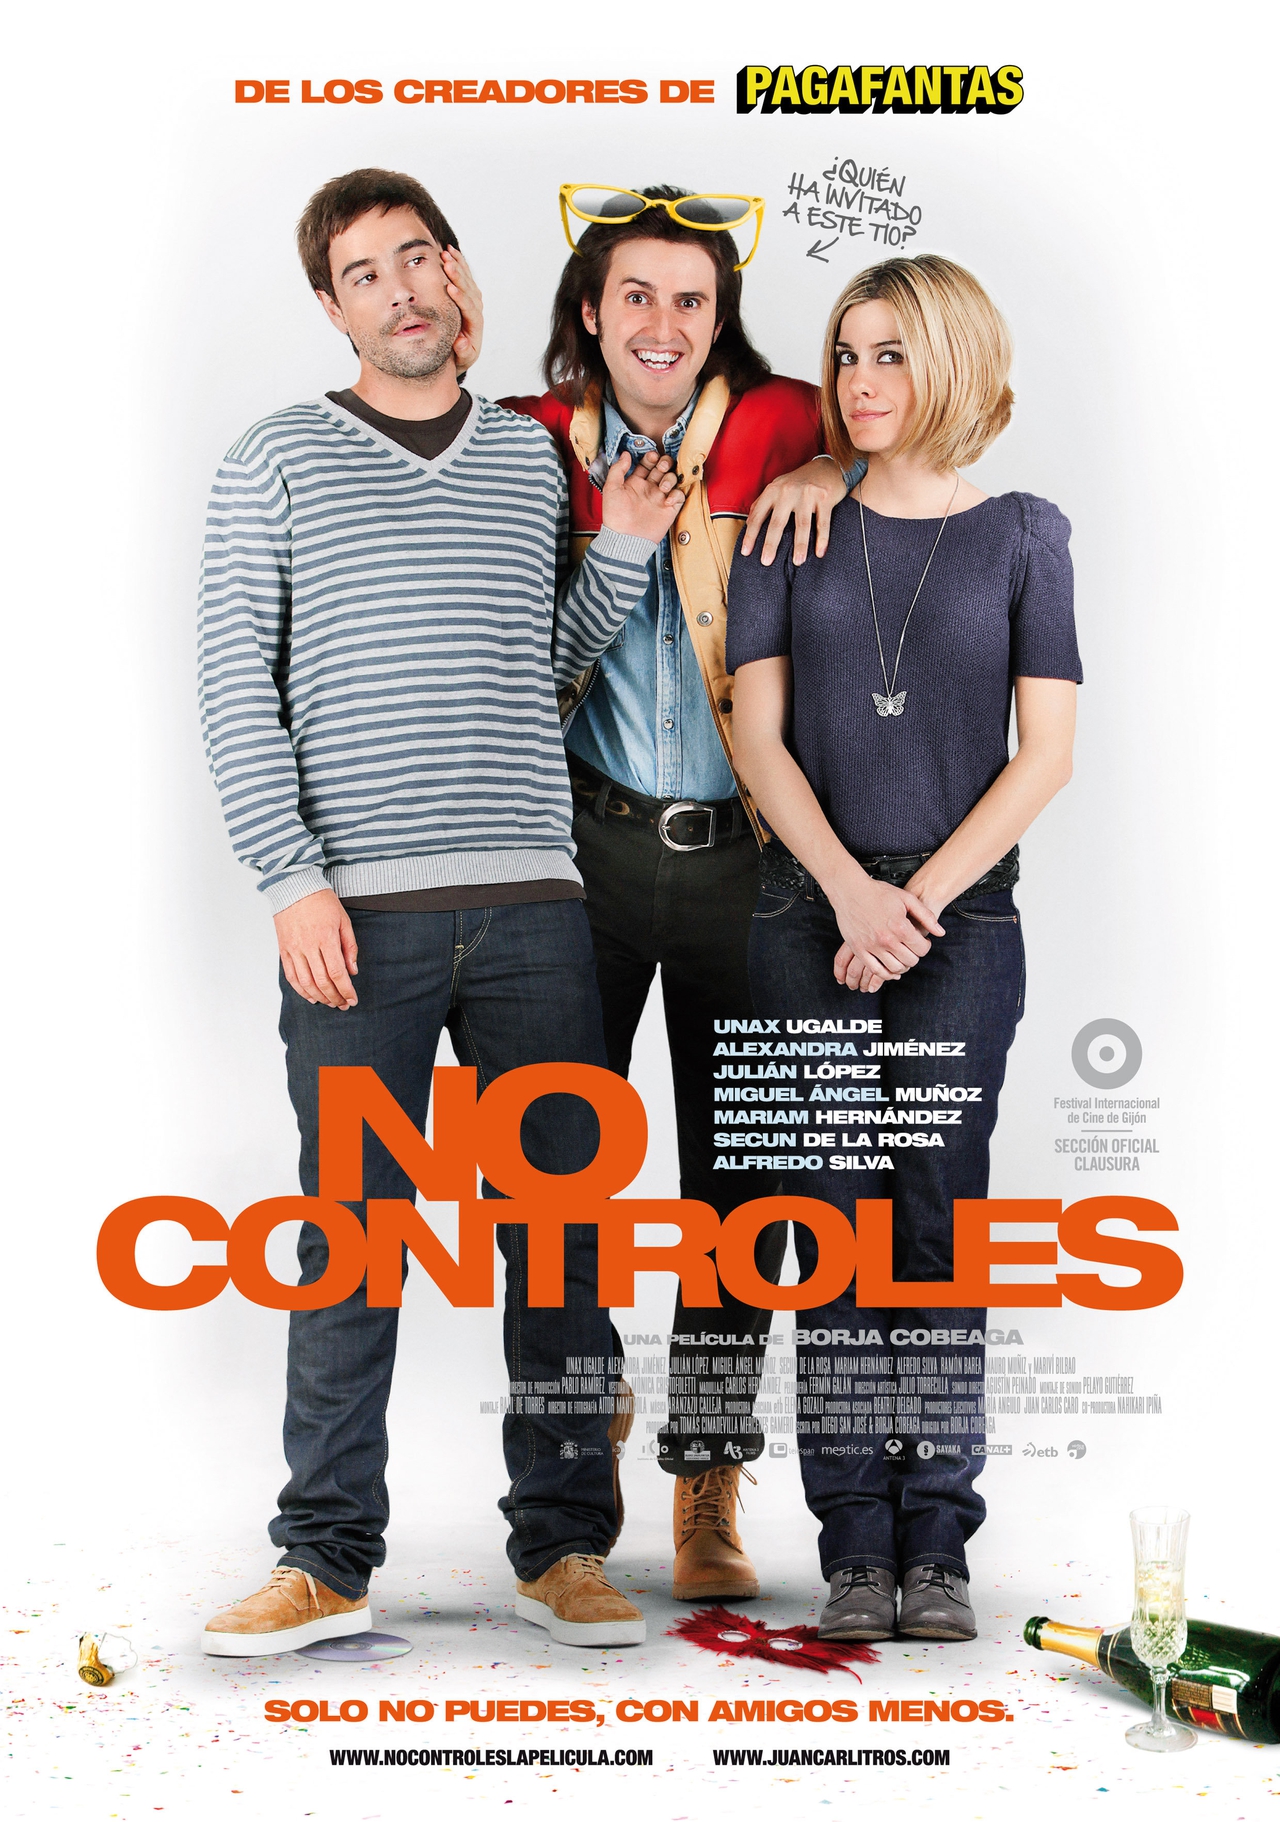 Julián López در صحنه فیلم سینمایی No controles به همراه Unax Ugalde و Alexandra Jiménez